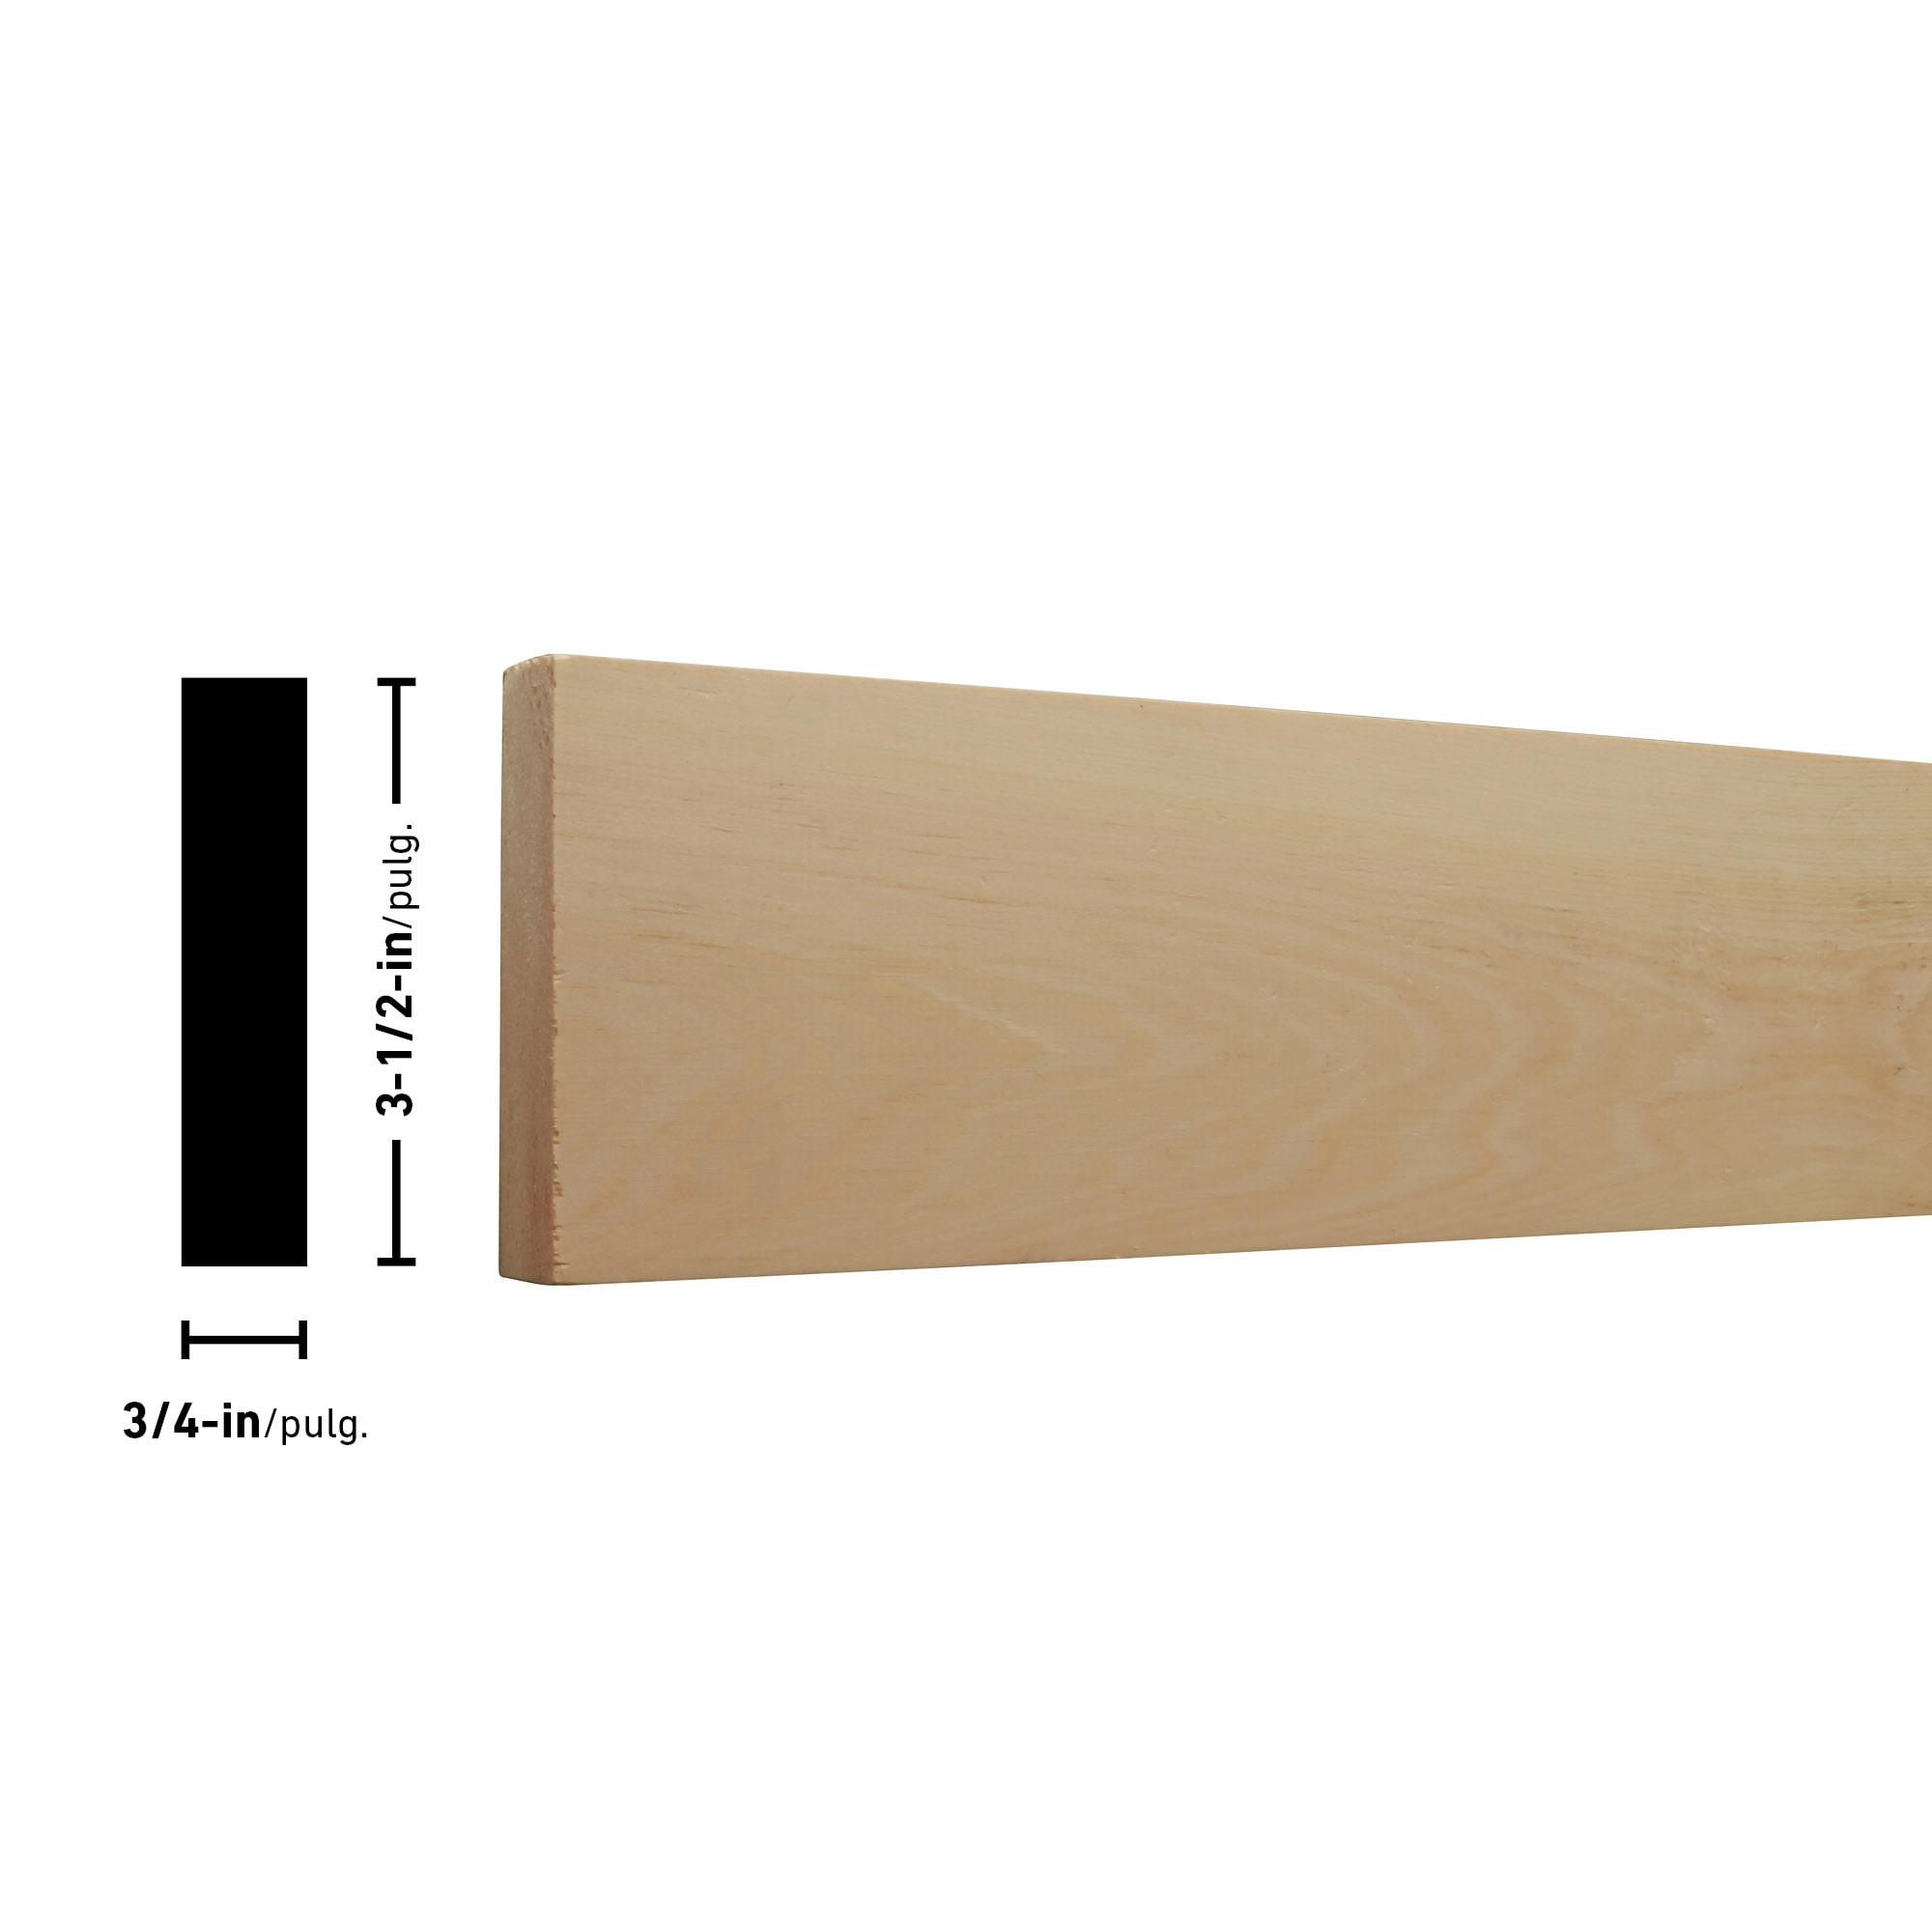 1 in. x 4 in. x 10 ft. Common White Wood Board – Denali Building